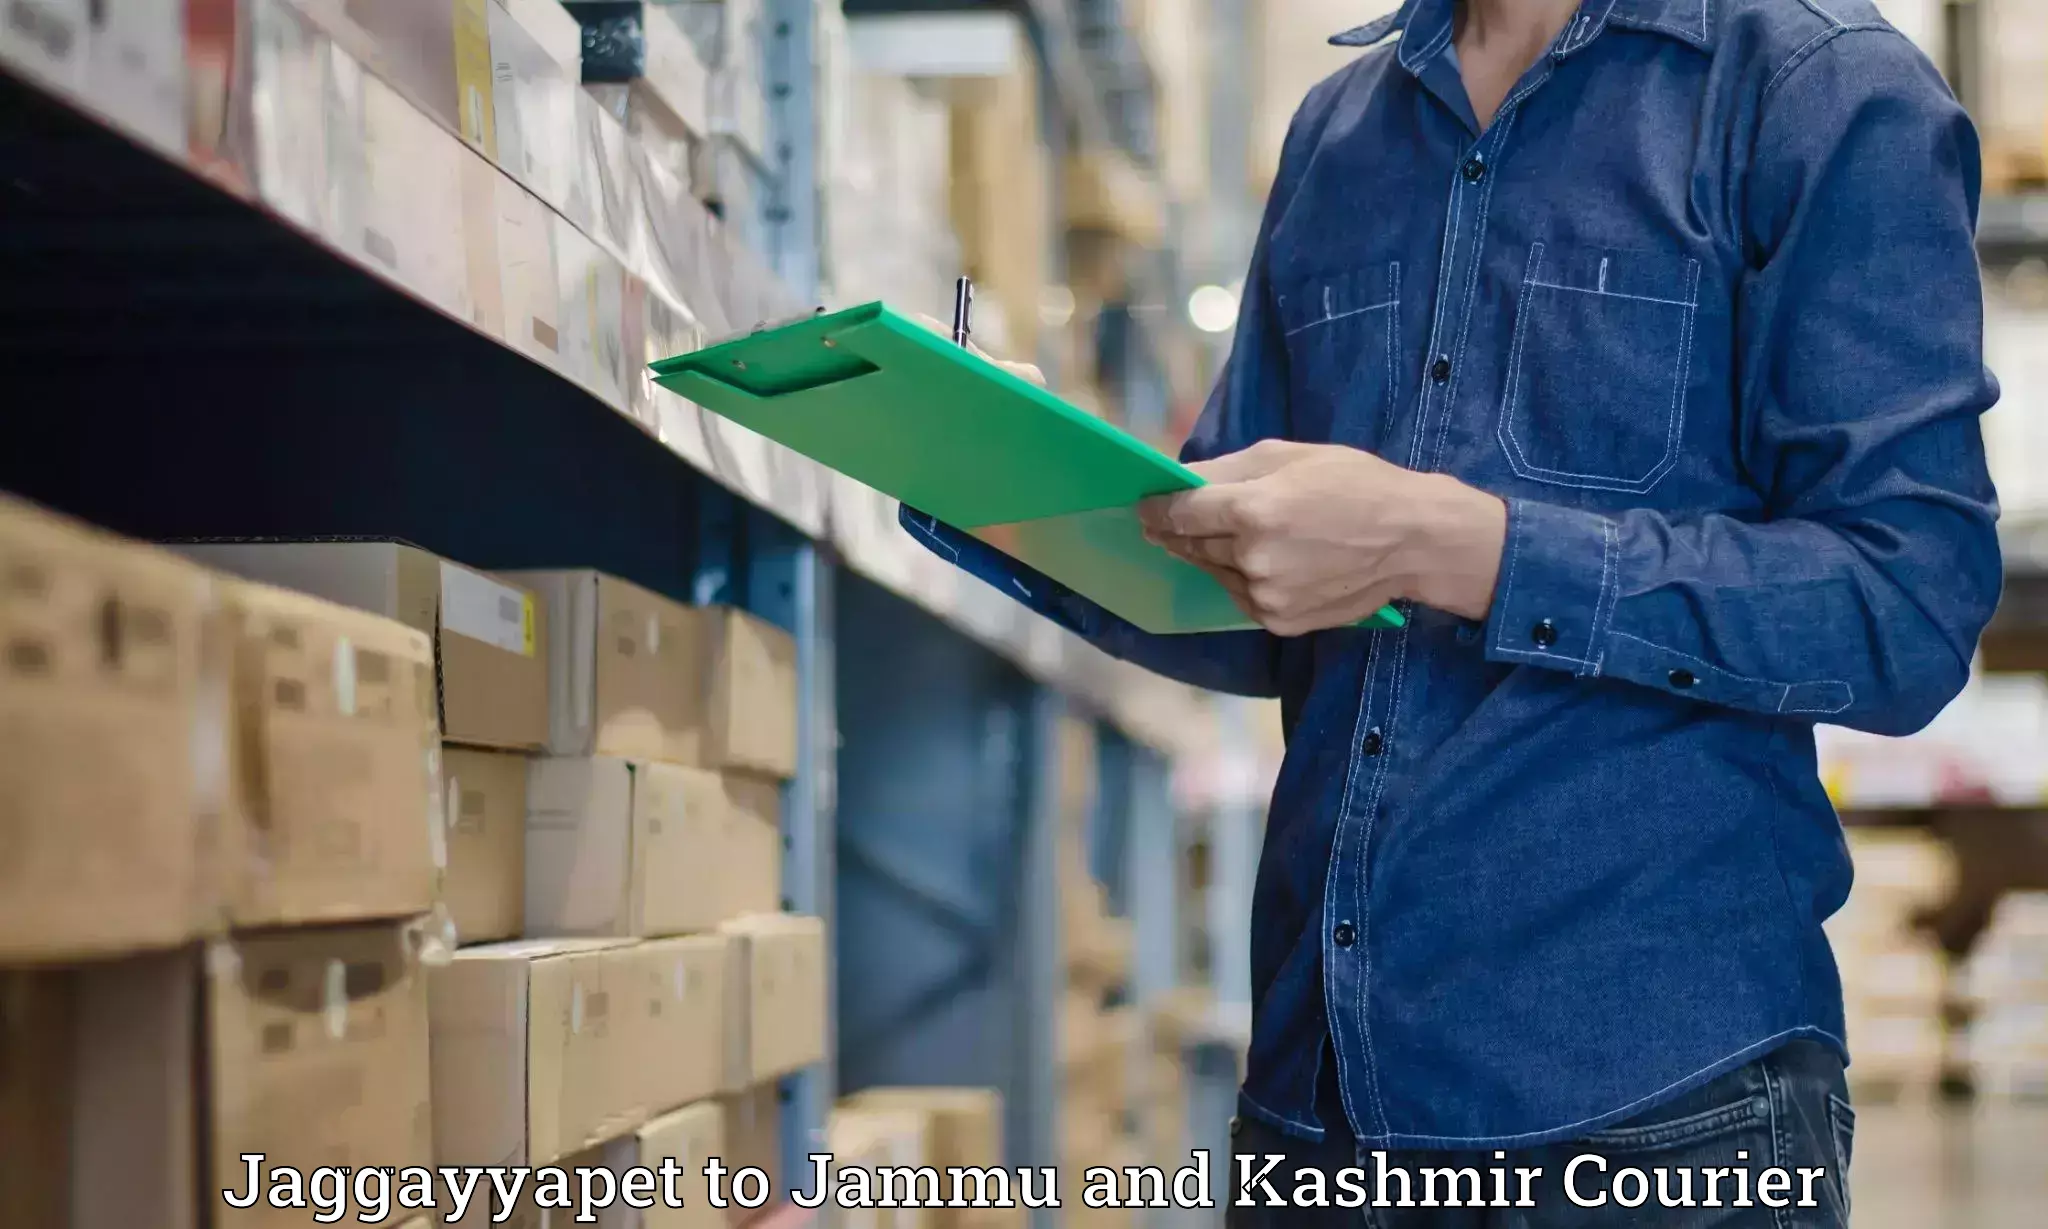 Global courier networks Jaggayyapet to Jammu